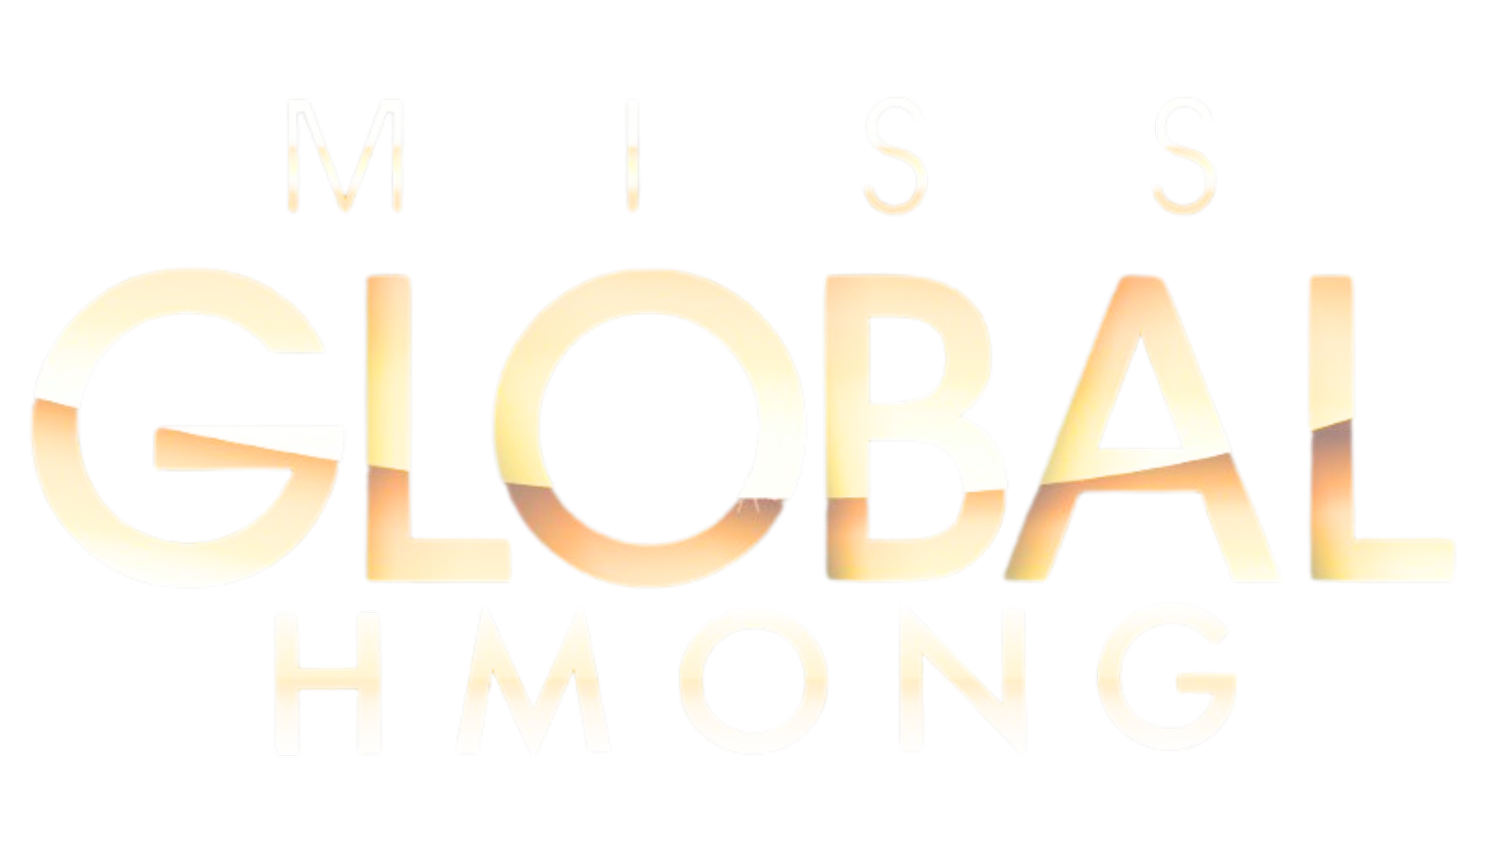 Miss Global Hmong